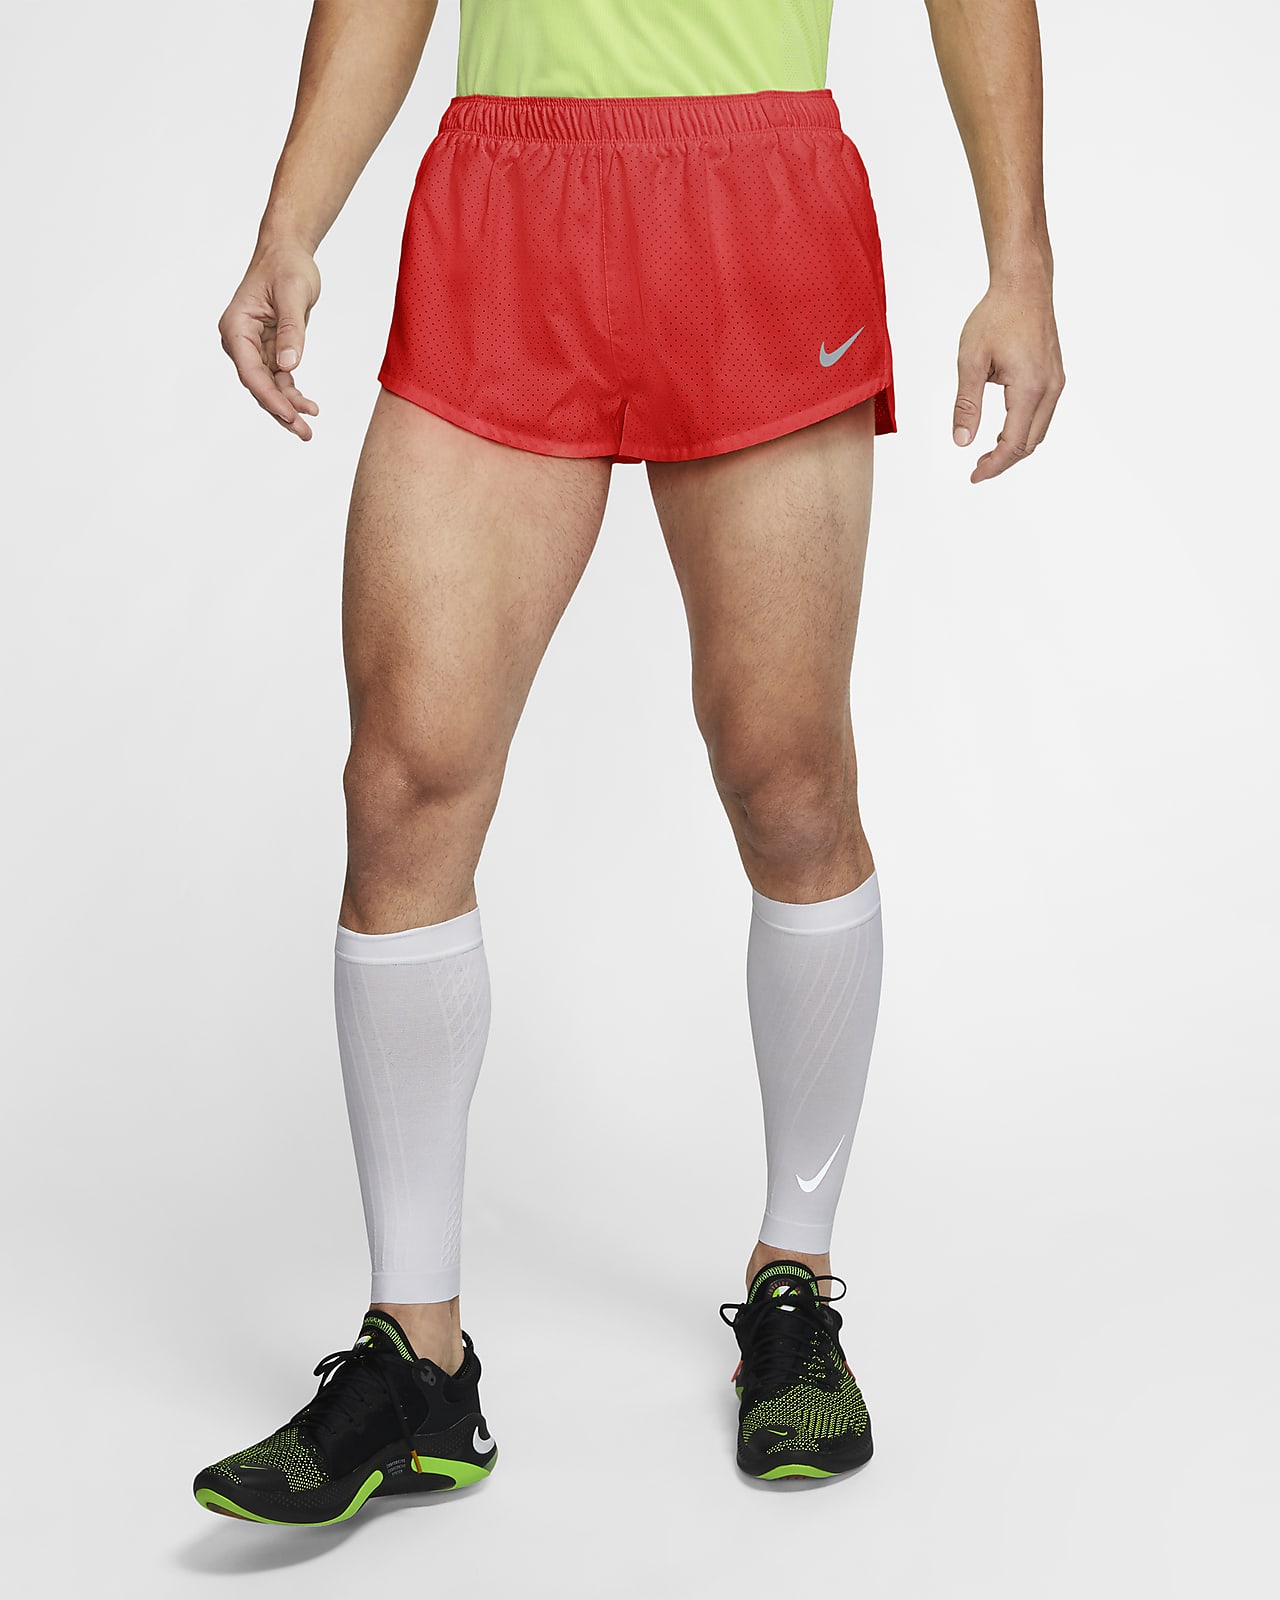 Brief-Lined Racing Shorts. Nike 